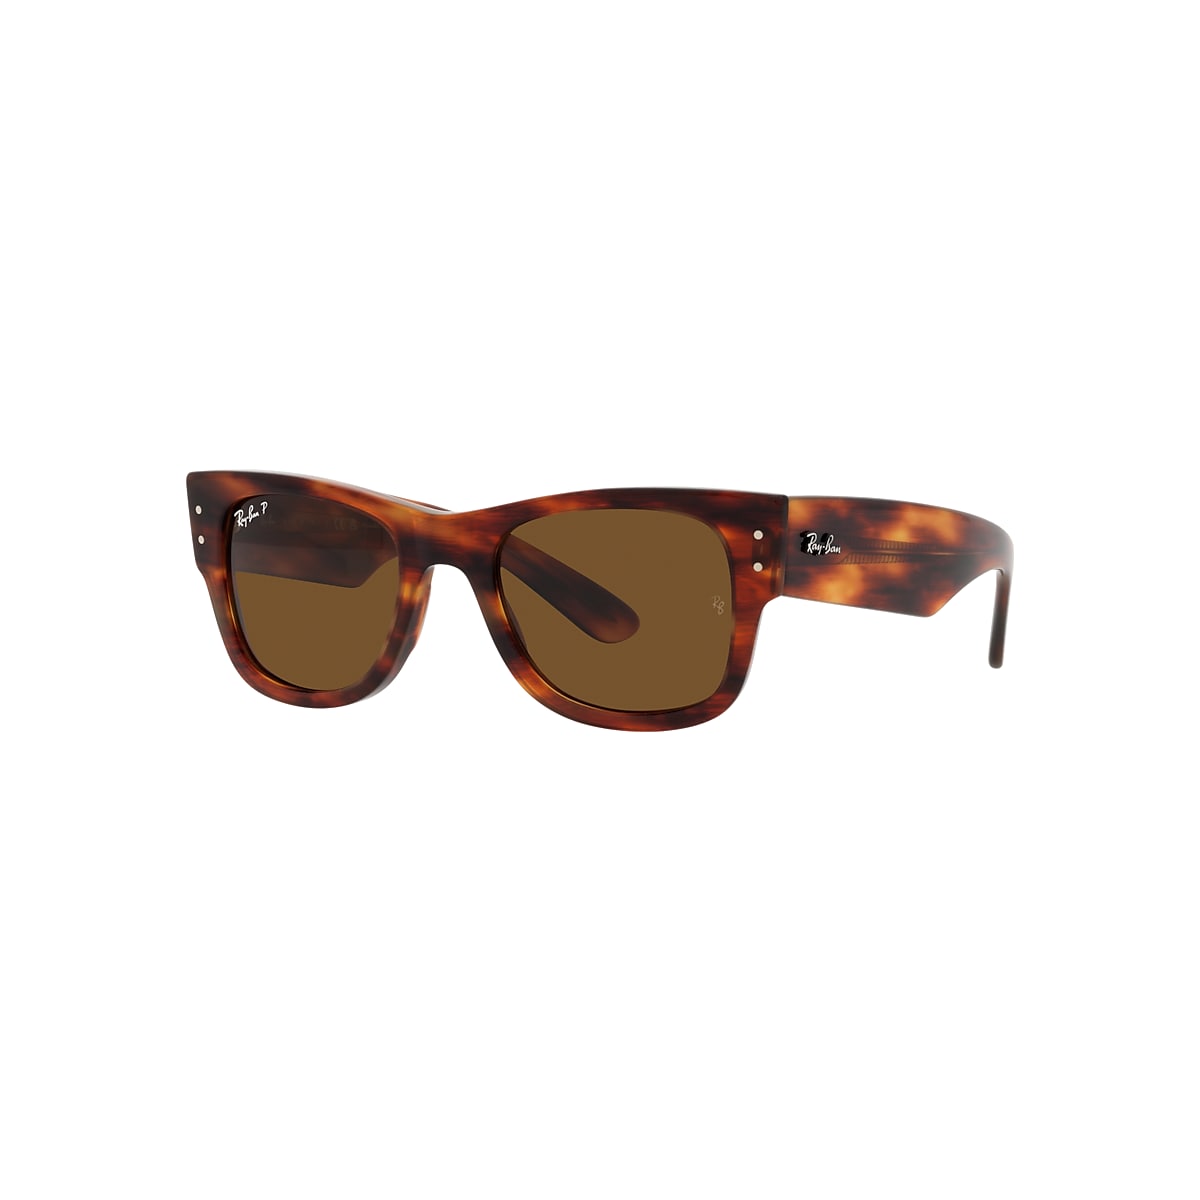 MEGA WAYFARER Sunglasses in Striped Havana and Brown 